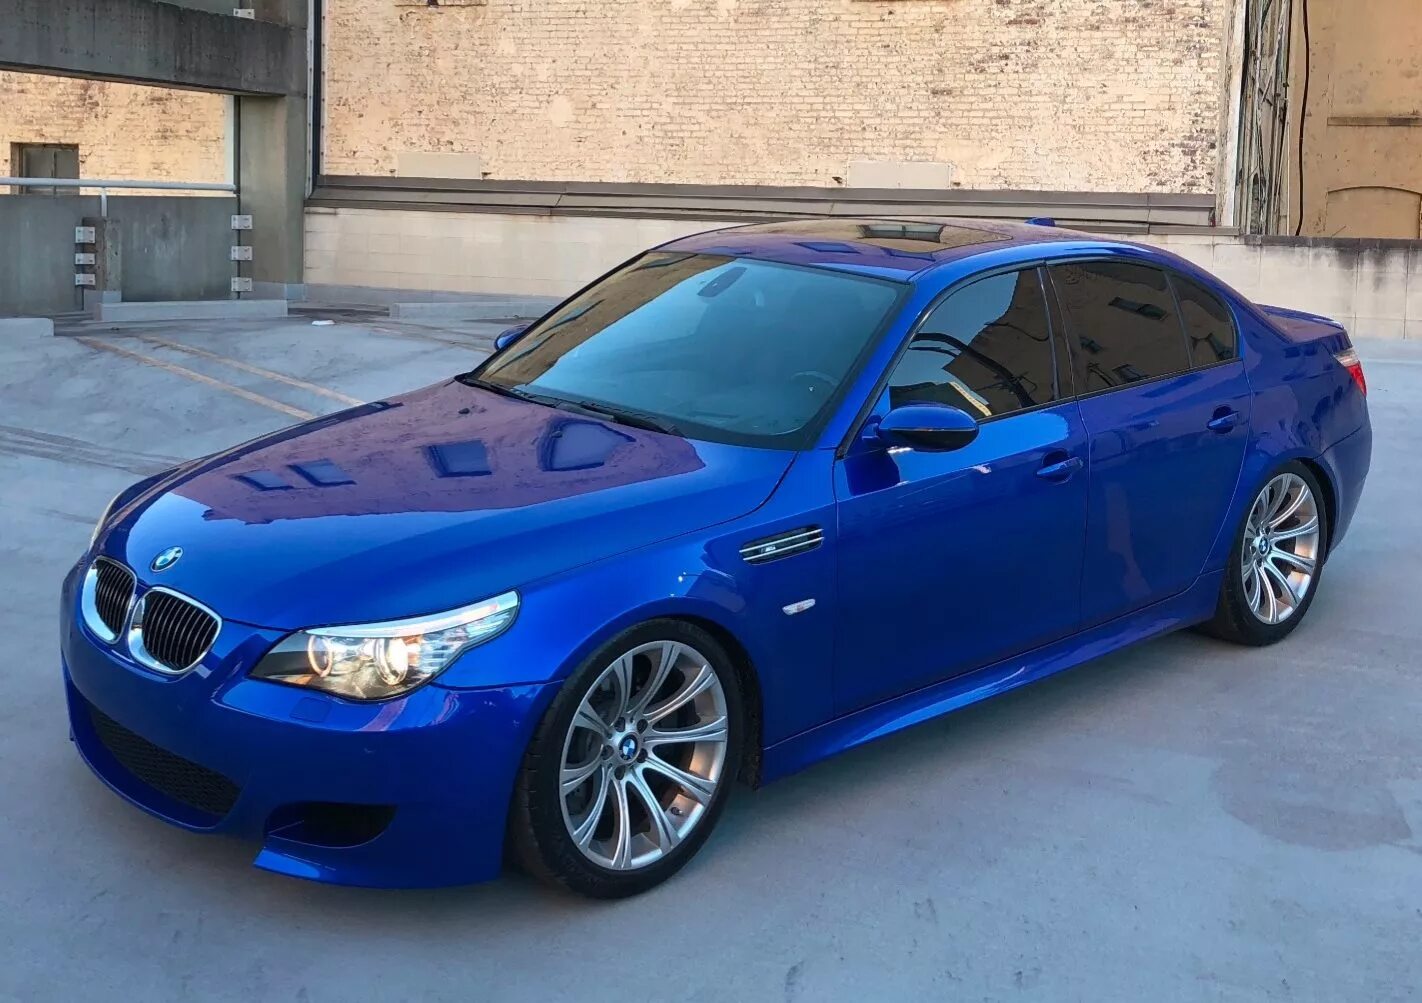 13 5 1 35. BMW m5 2008. BMW m5 e60 Blue. BMW m5 синяя. BMW m5 e60 2008.